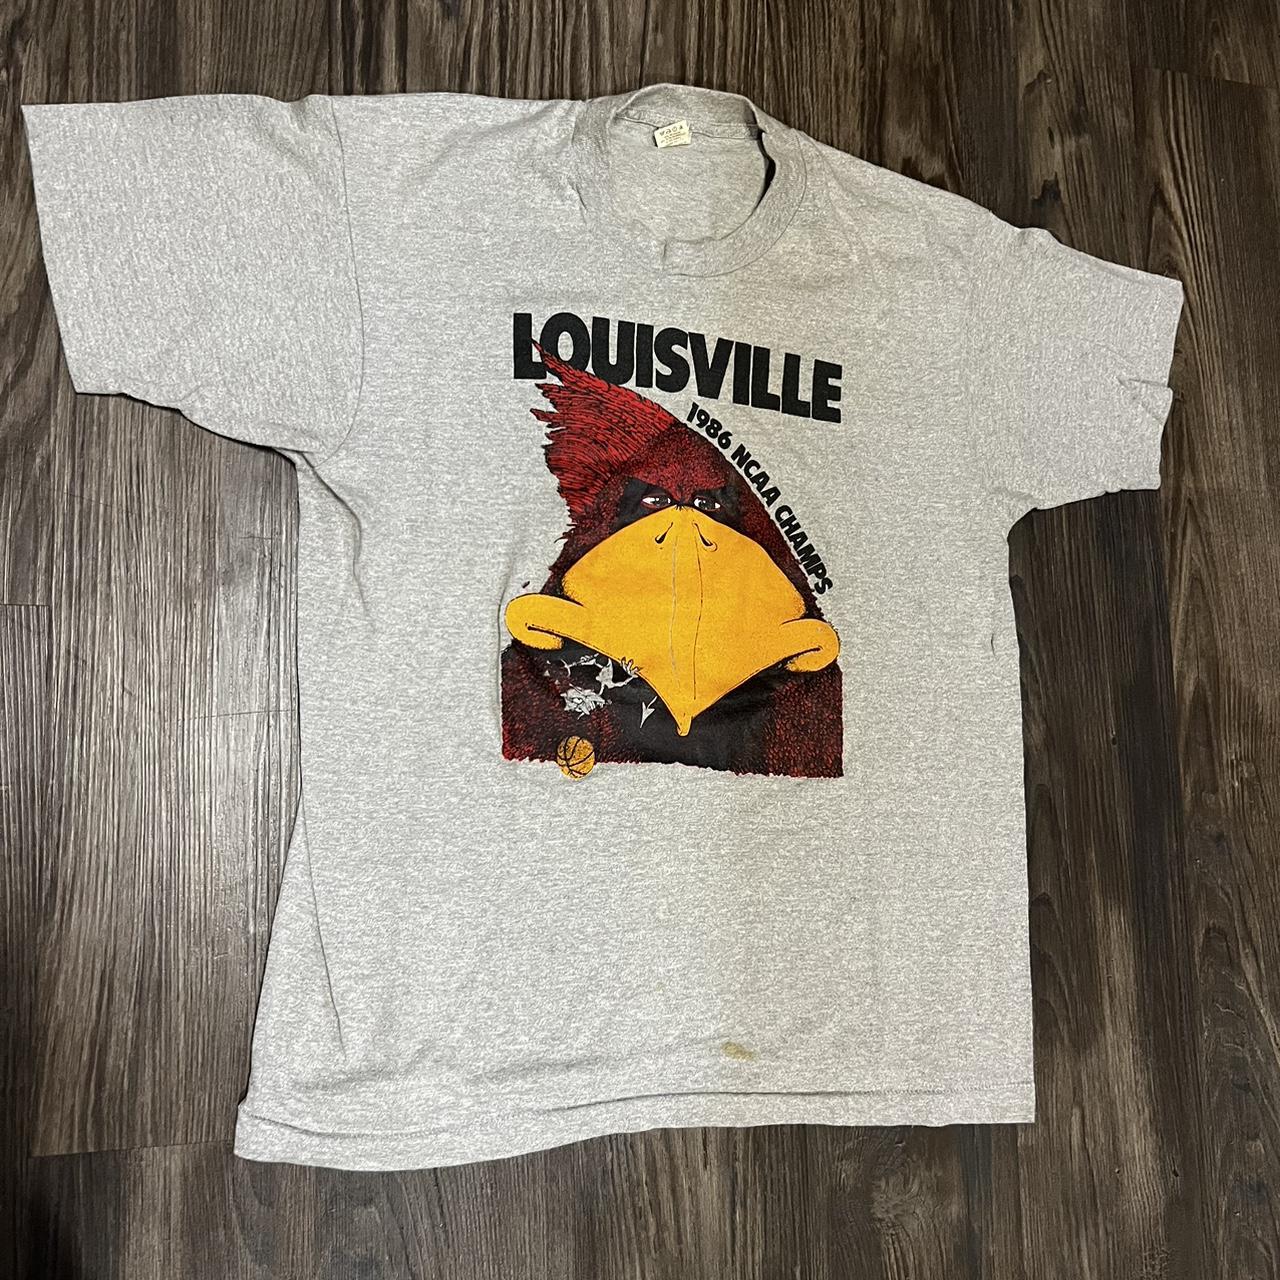 Vintage University of Louisville Cardinals - Depop